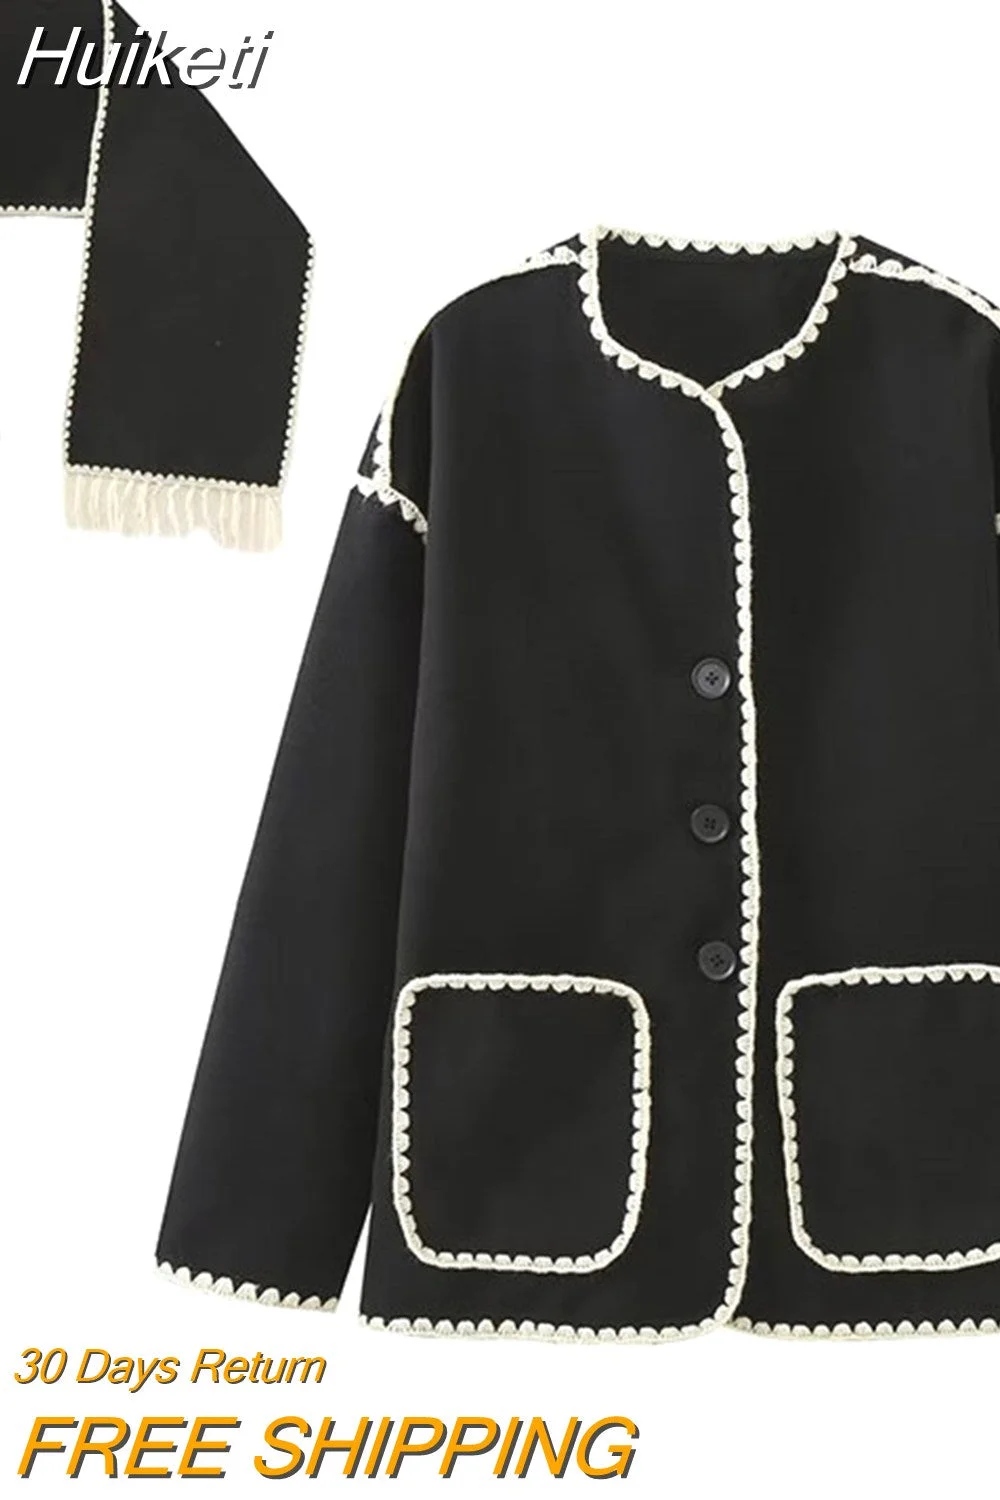 Huiketi New Autumn Winter Women Vintage Coat Black Crochet Contour Scarf Straight Button Pocket Elegant Casual Female Chic Coats